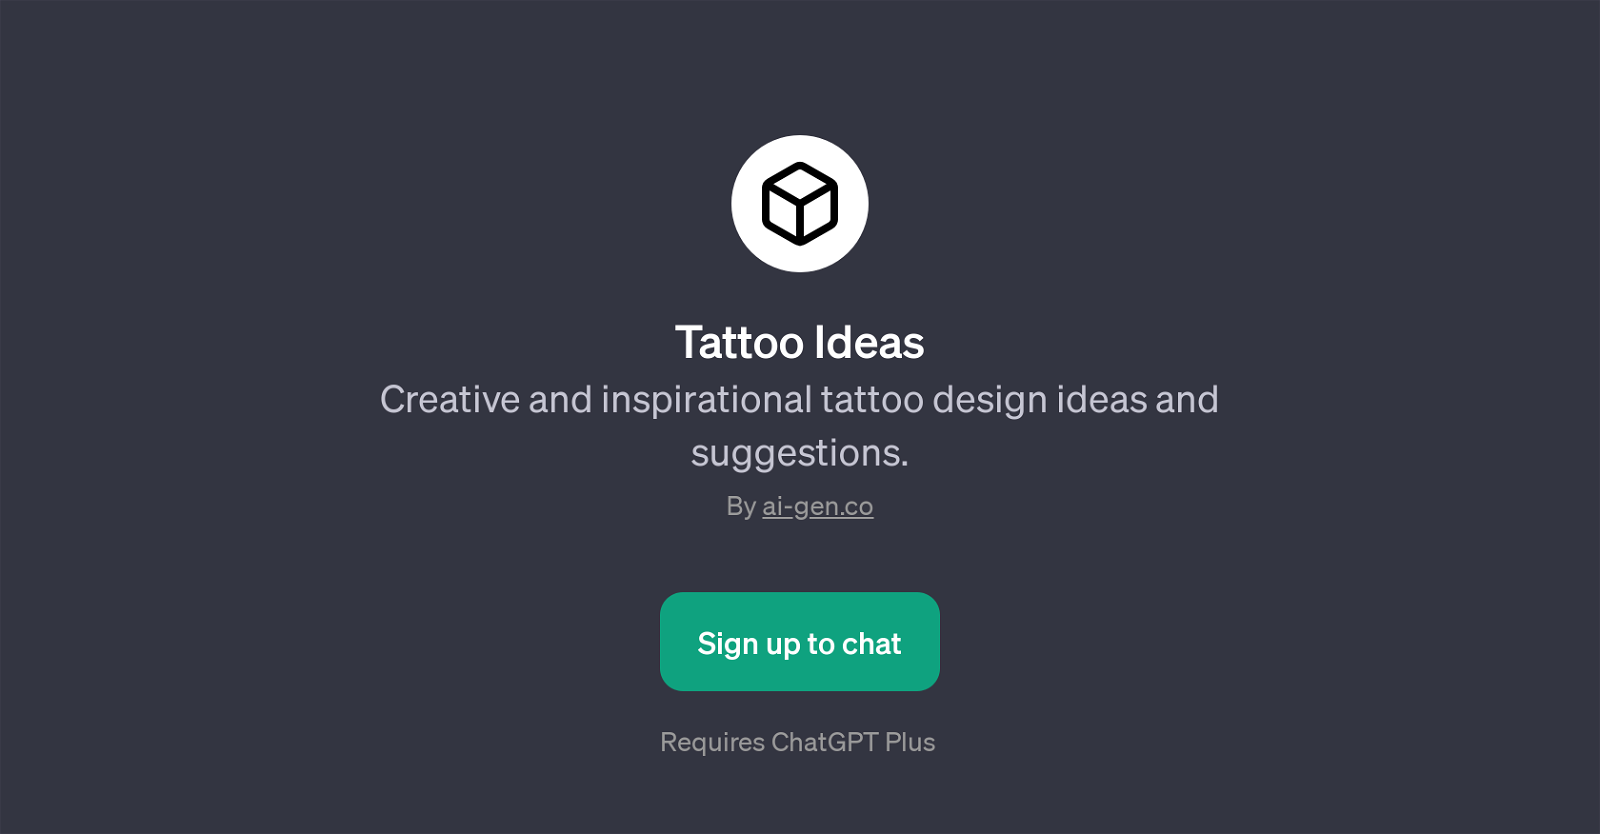 Tattoo Ideas website